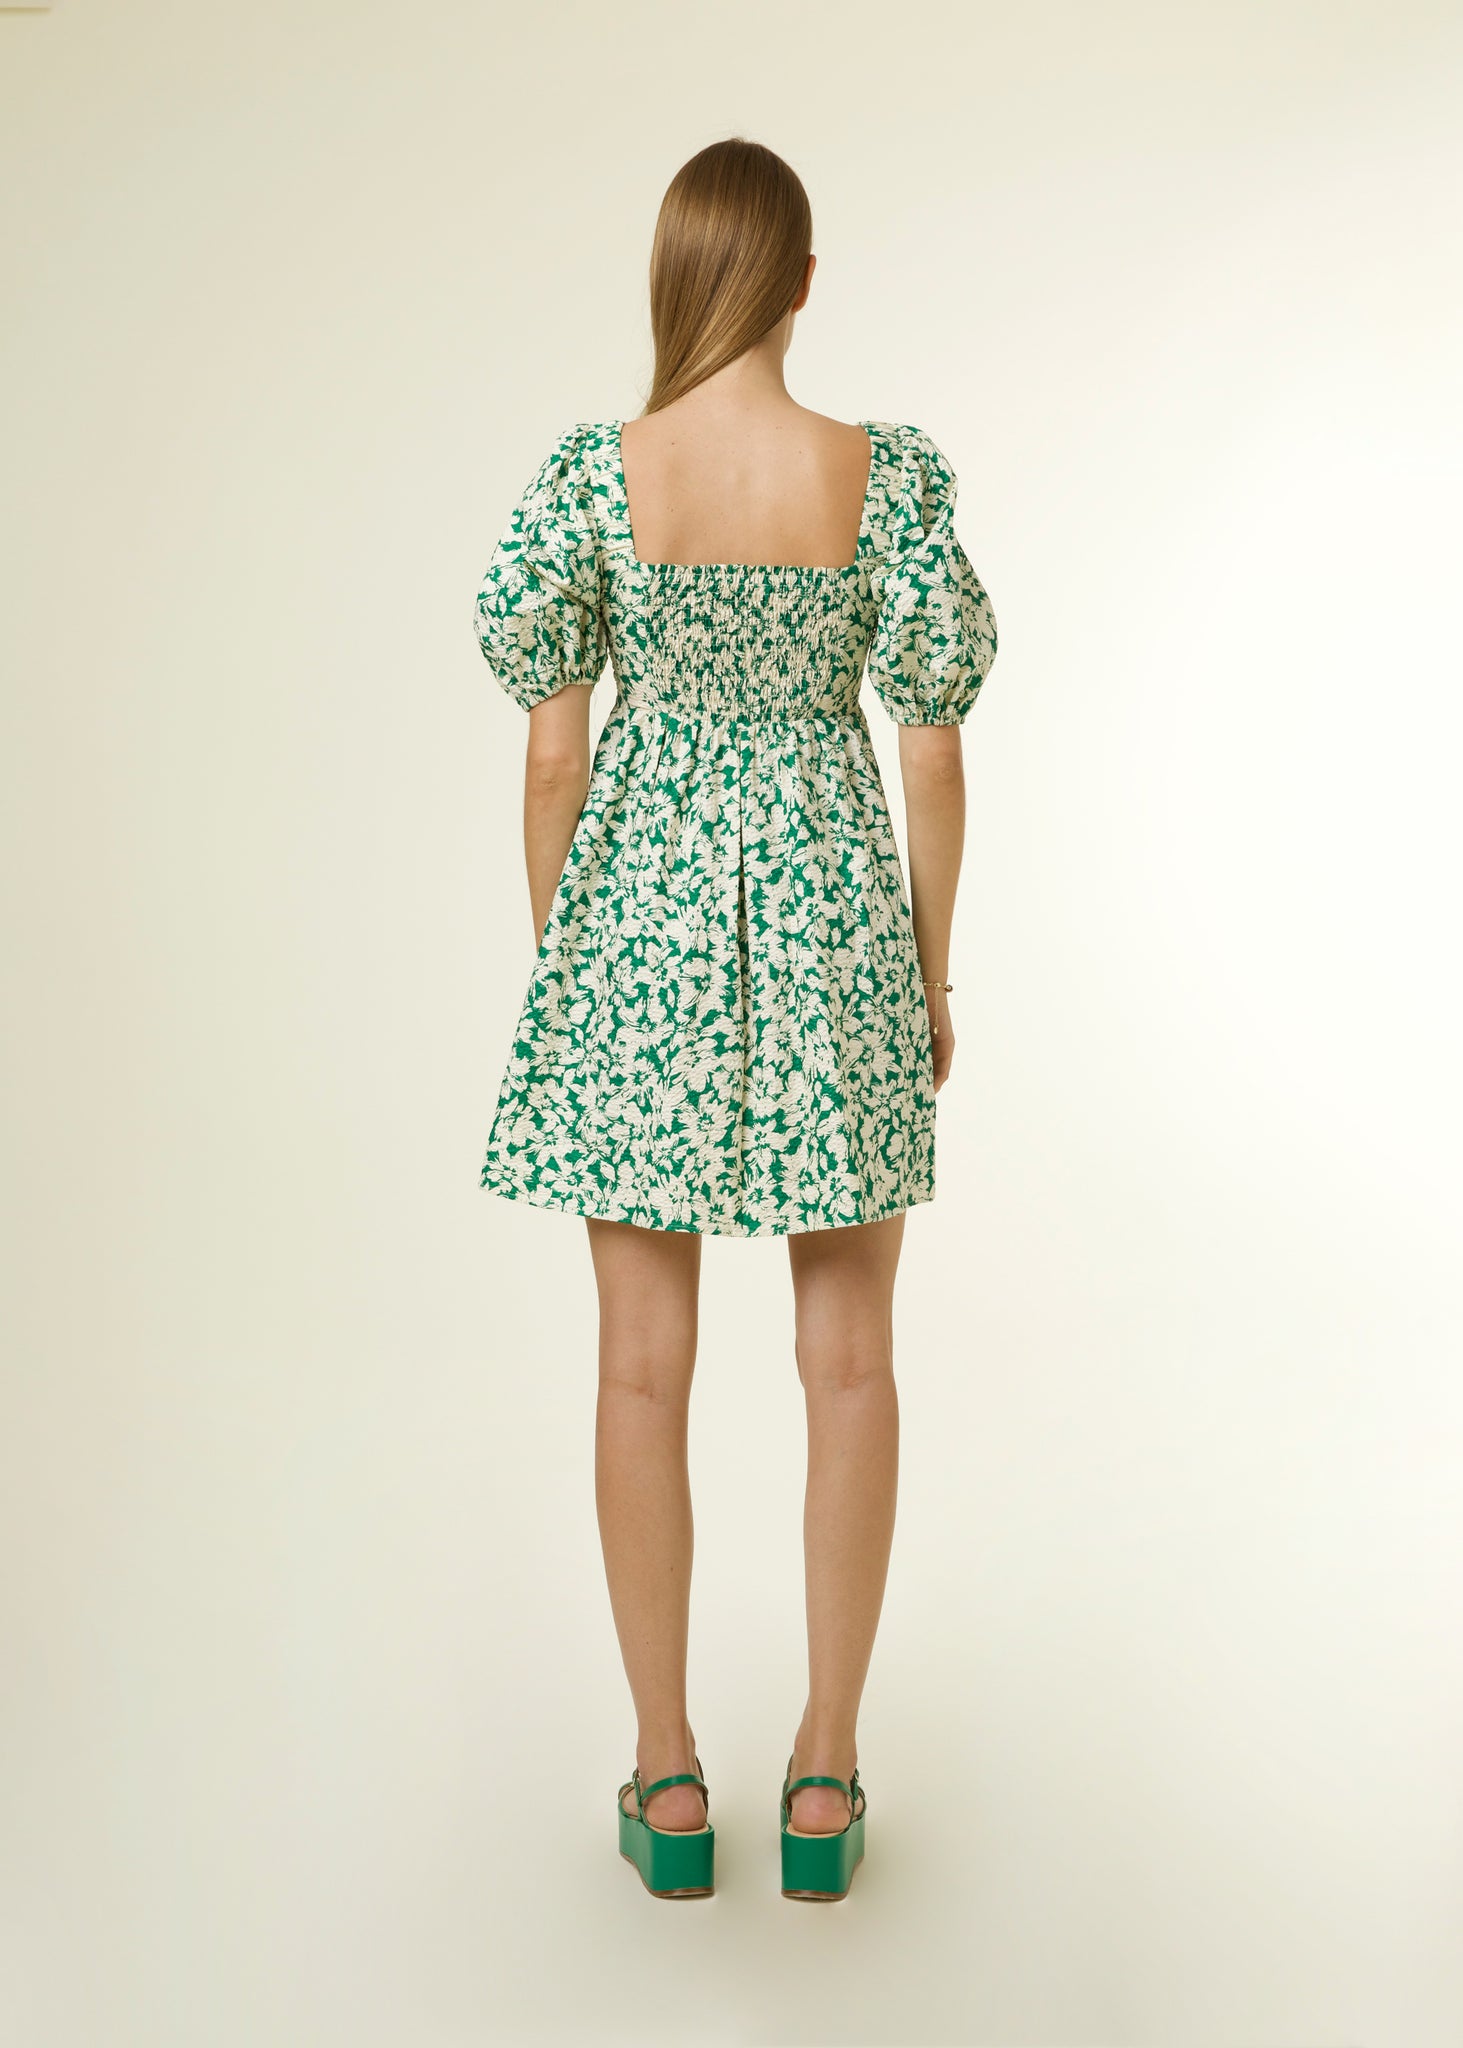 FRNCH - Emy Green Floral Dress